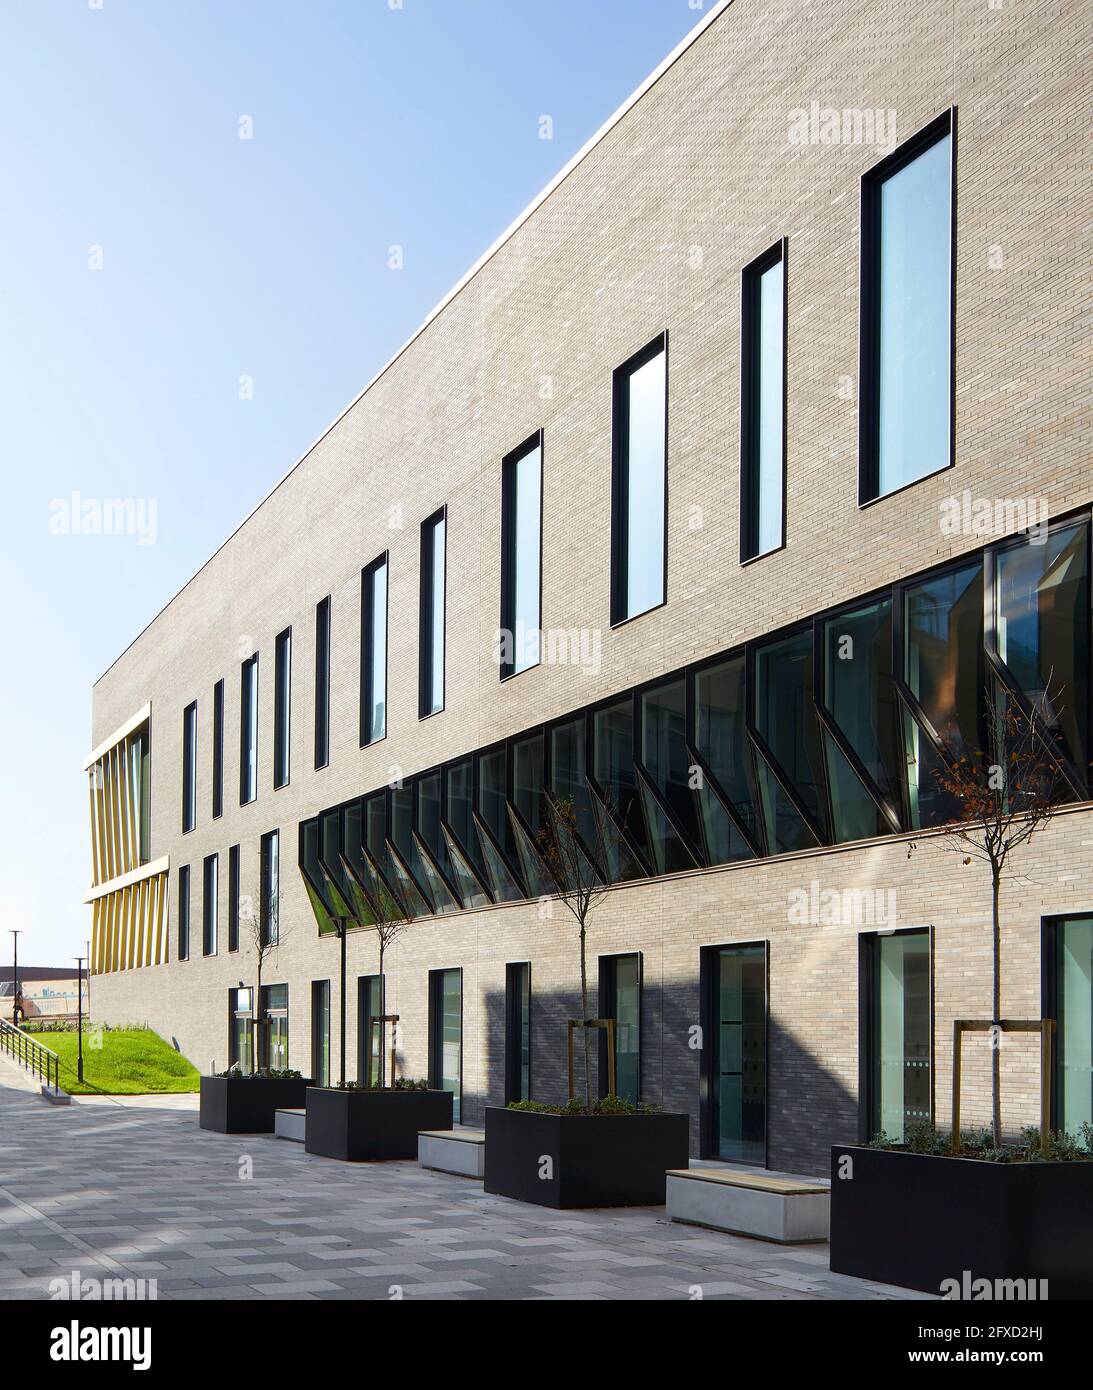 Facade perspektive. University of Birmingham, Collaborative Teaching Laboratory, Birmingham, United Kingdom. Architect: Sheppard Robson, 2018. Stock Photo